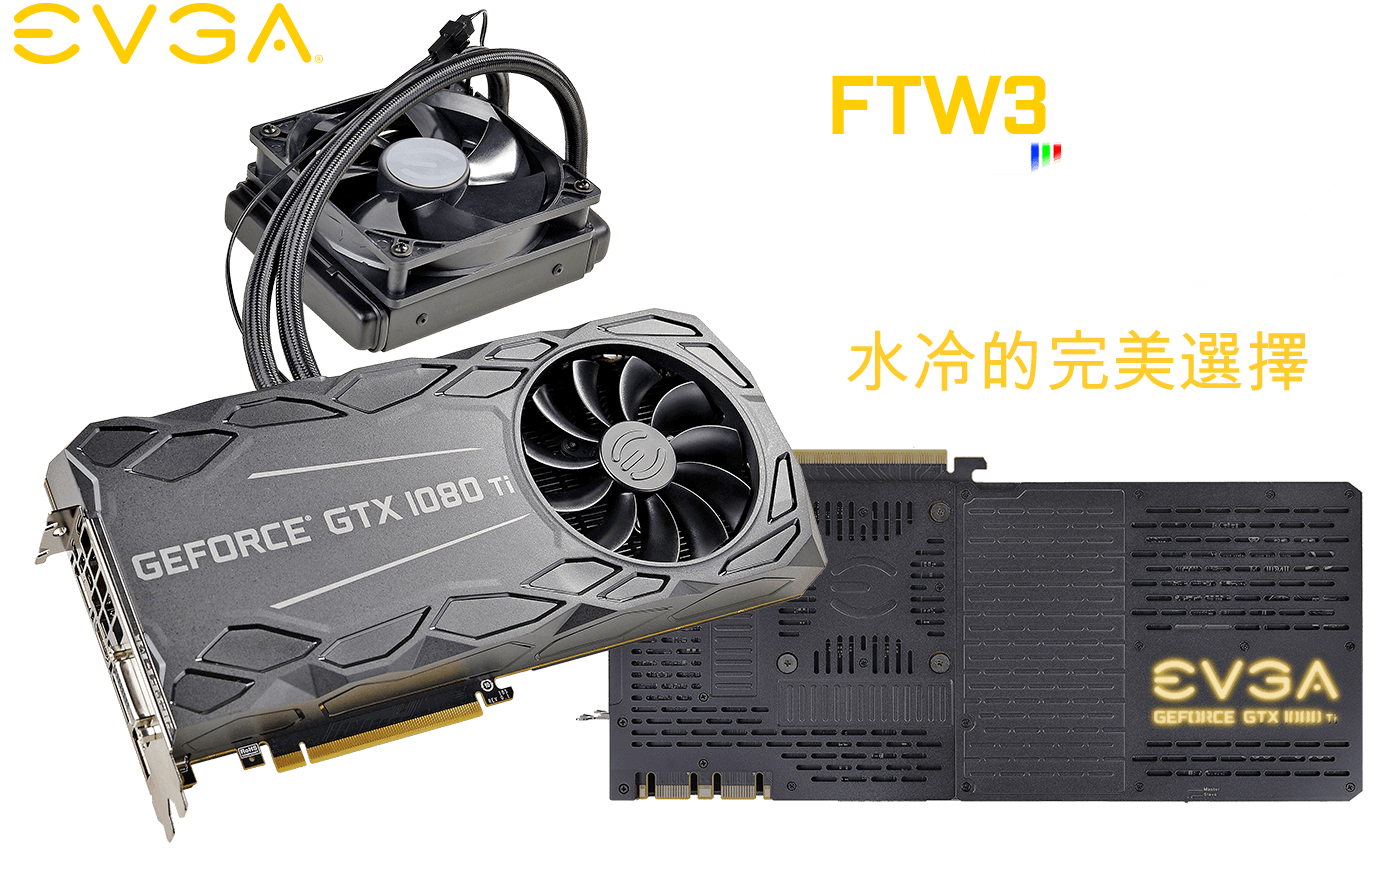 EVGA GeForce GTX 1080 Ti FTW3 HYBRID